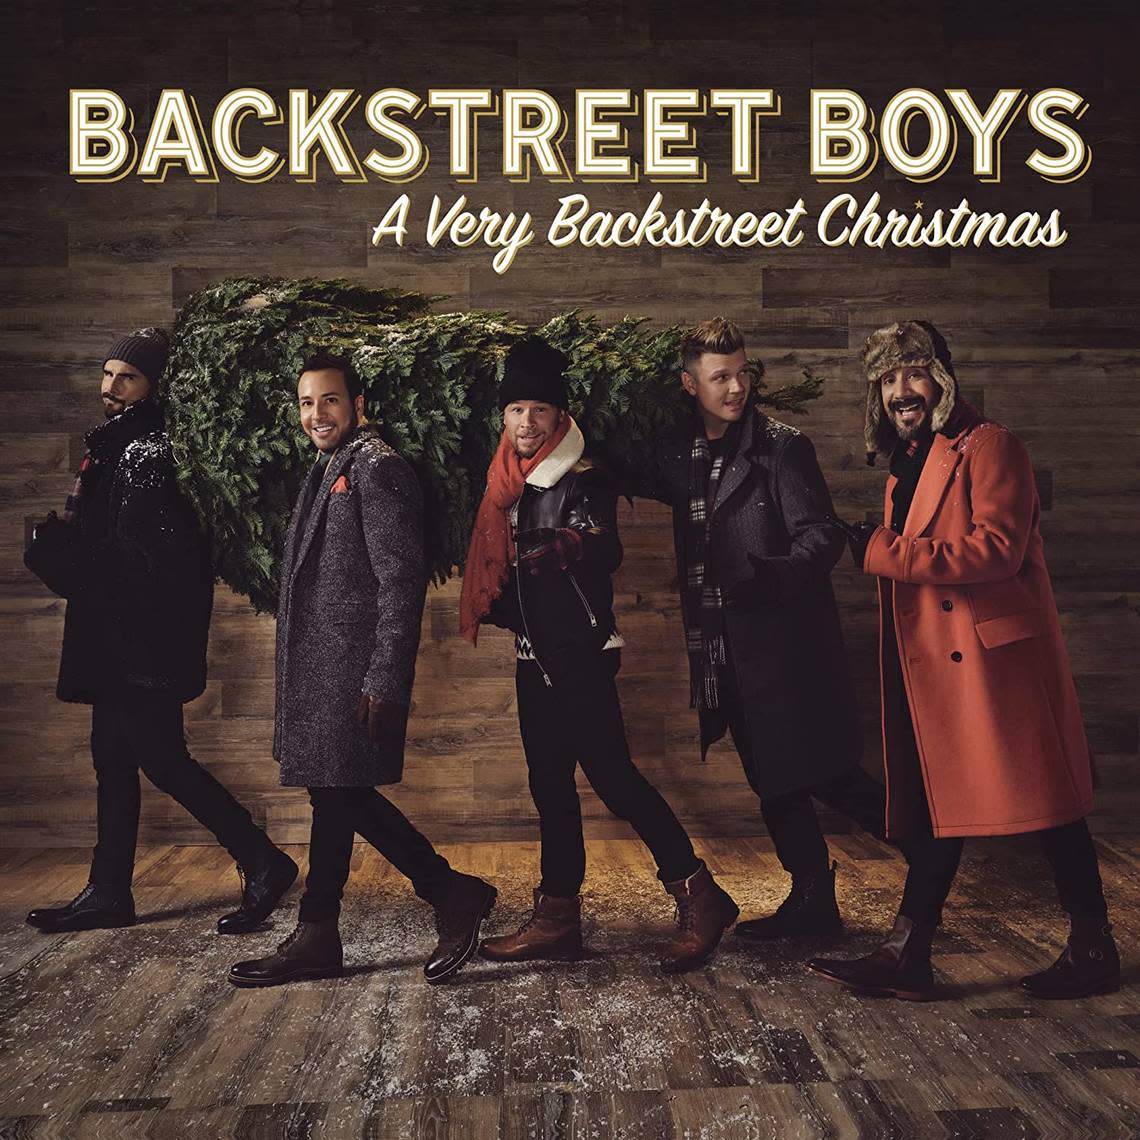 Backstreet Boys, “A Very Backstreet Christmas”